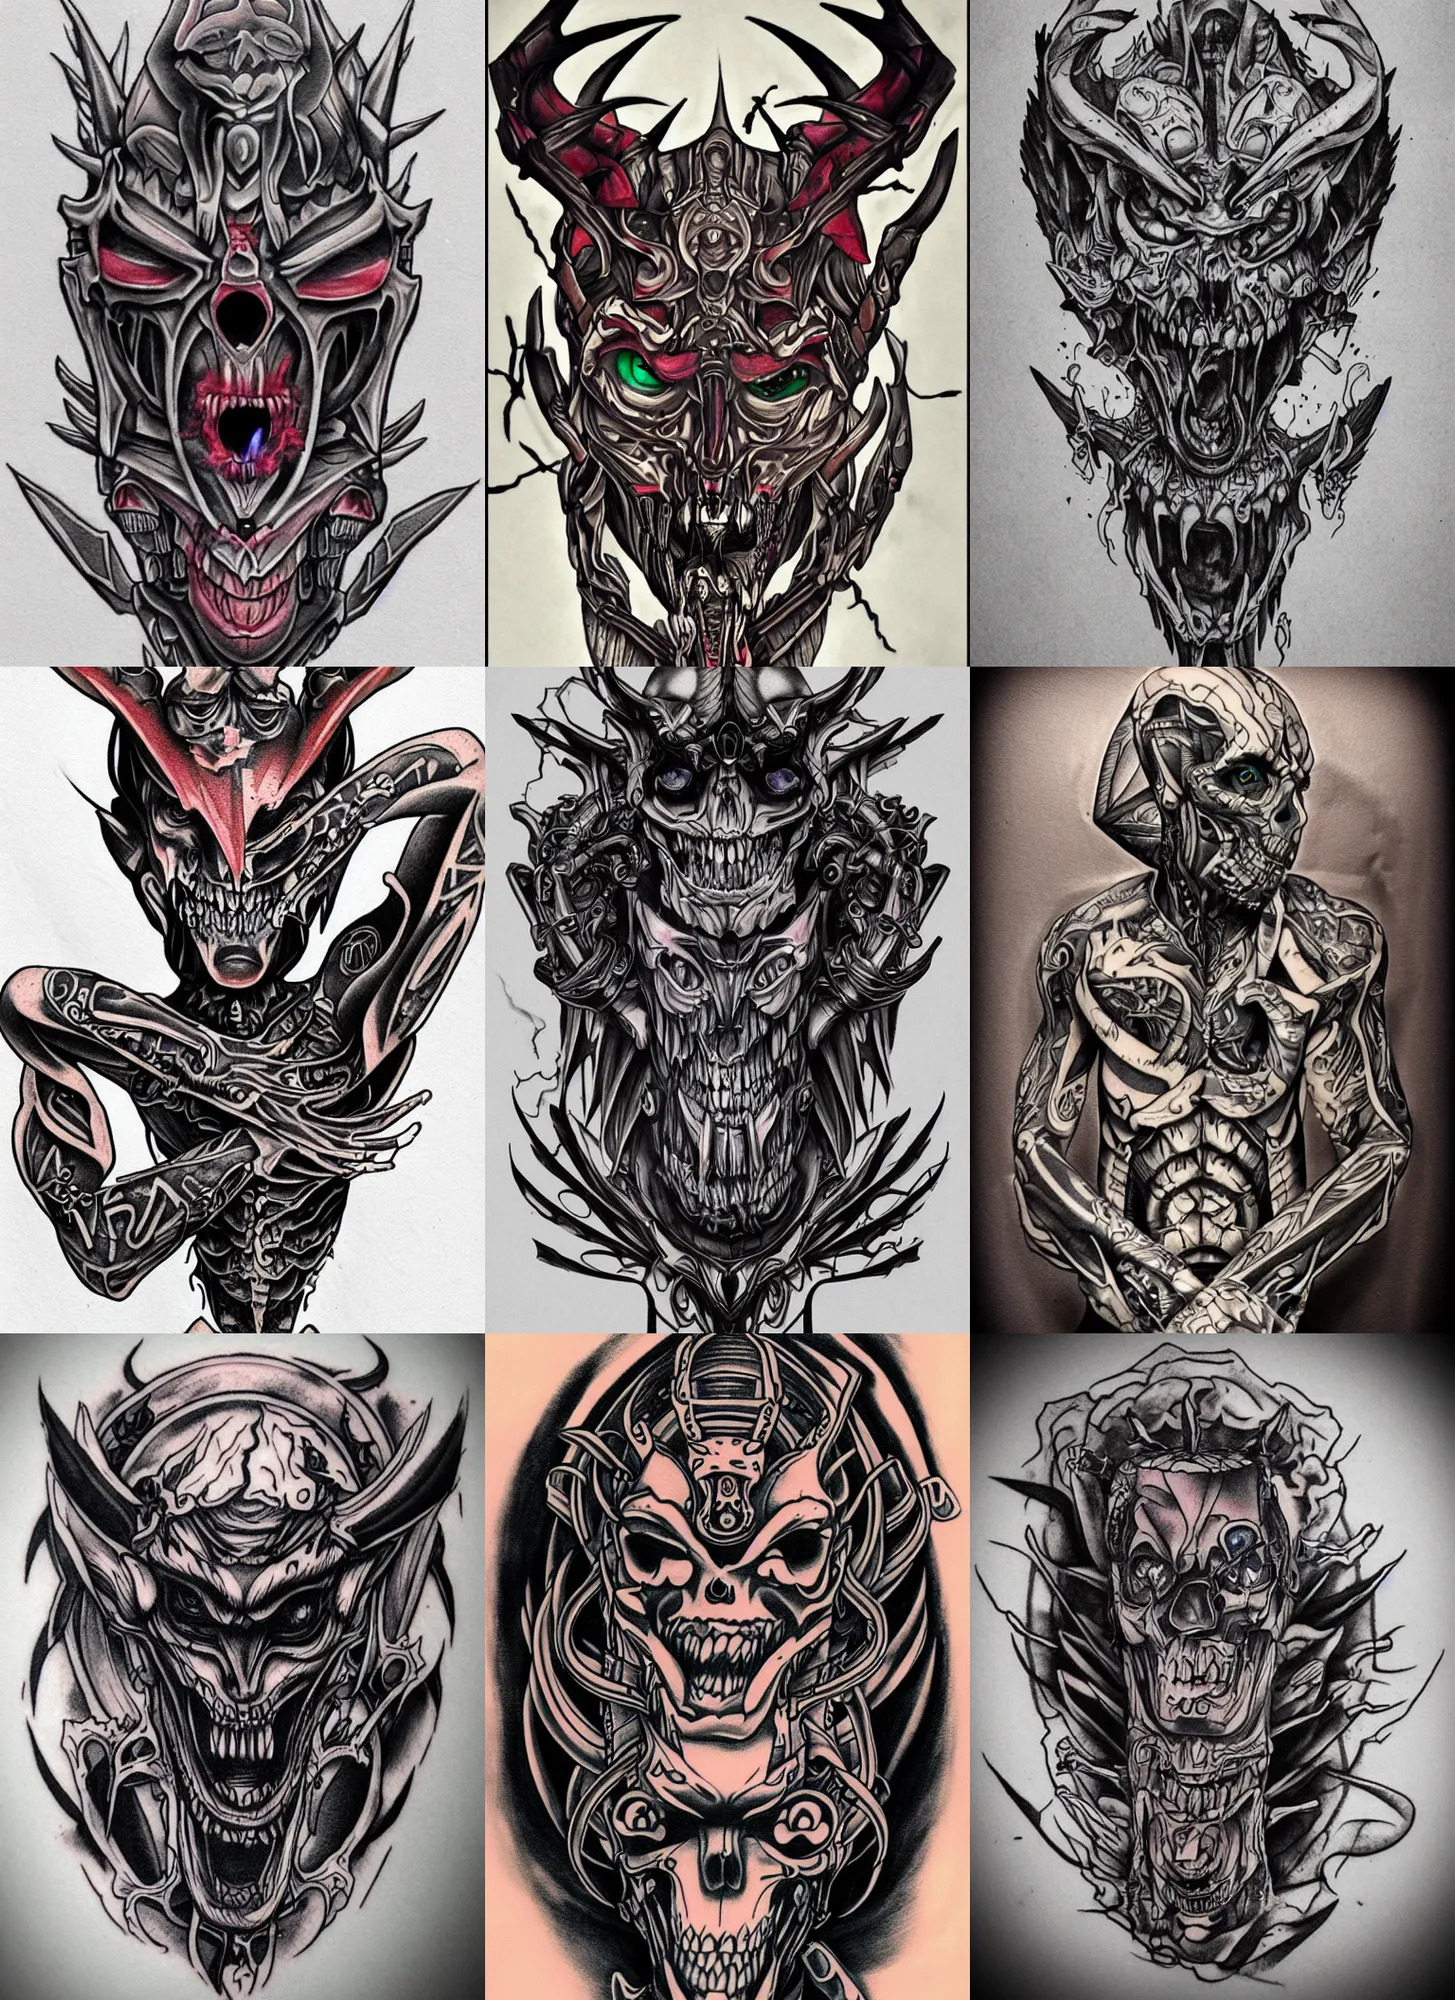 Prompt: Tattoo Design demonic cyborg